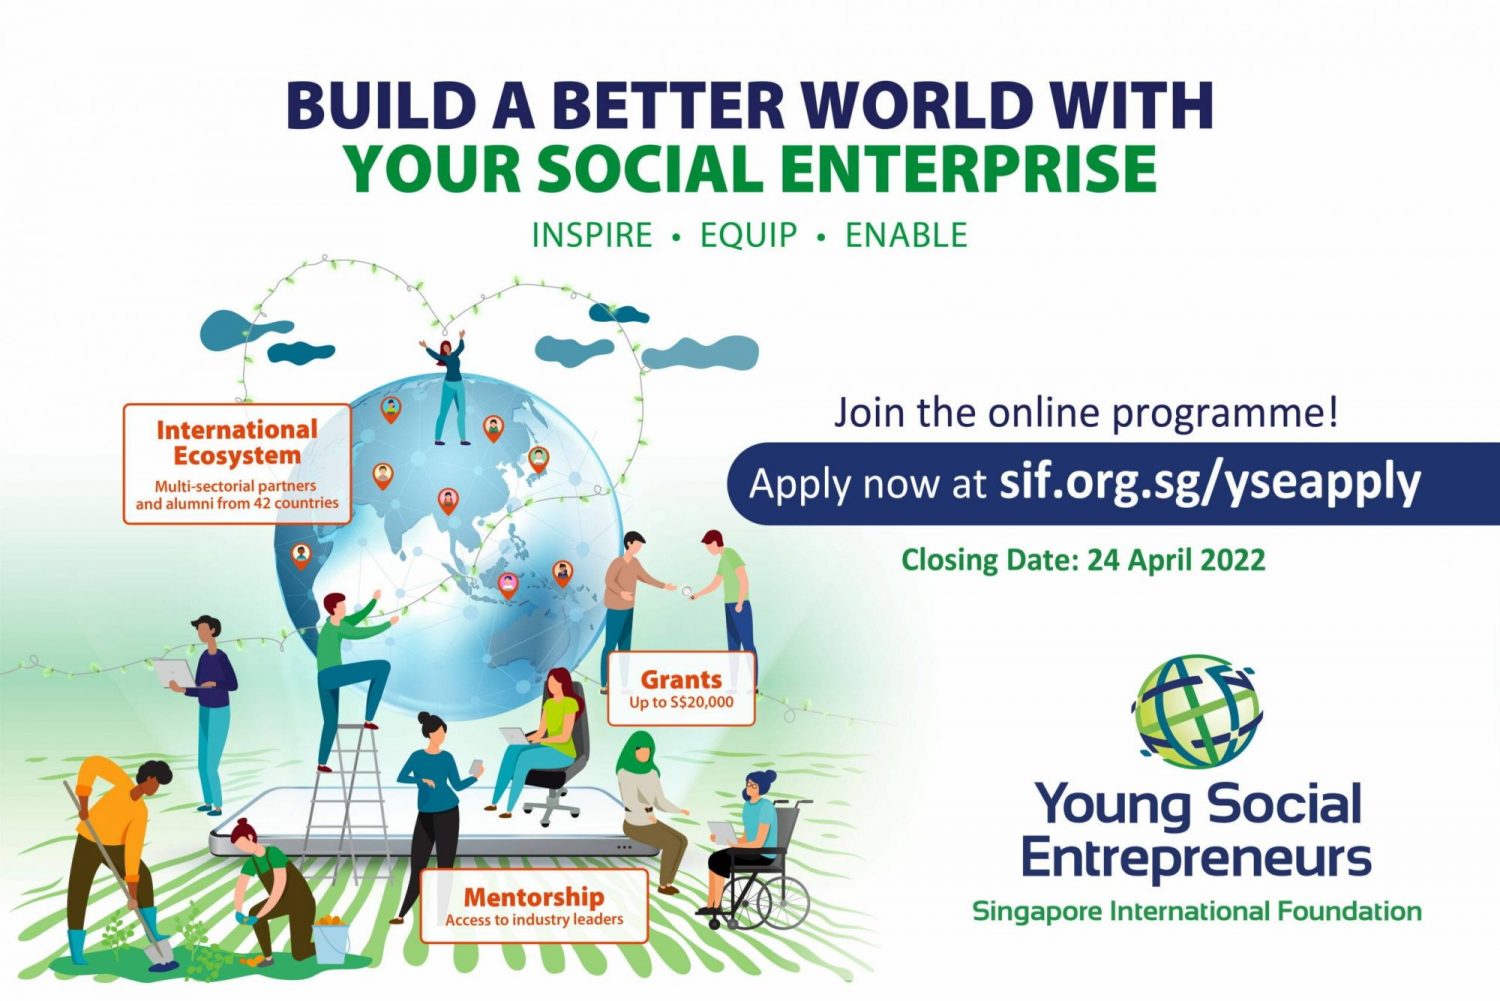 2022 Singapore International Foundation (SIF) Young Social Entrepreneurs Global Program